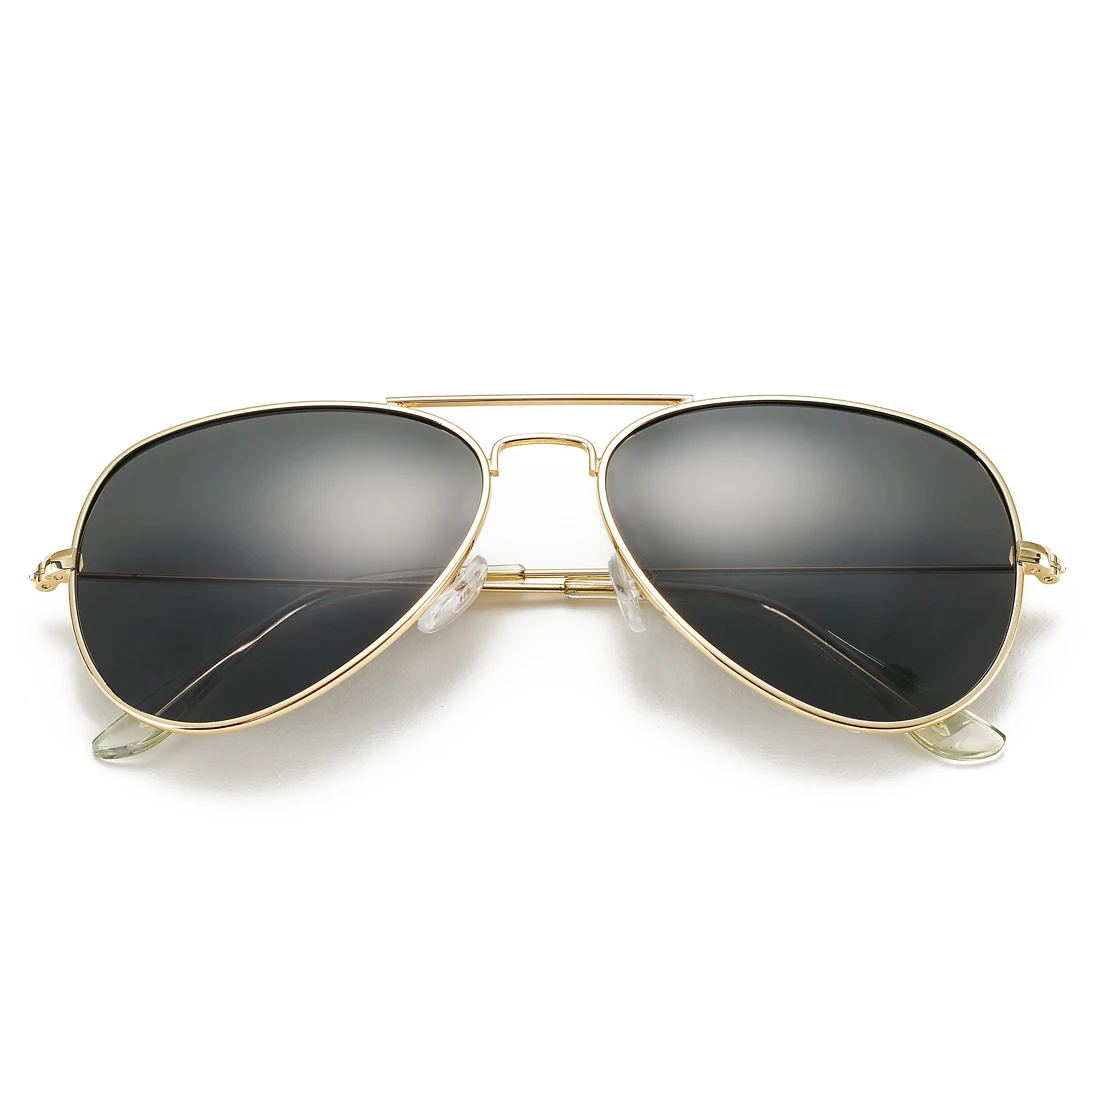 

Sunglasses 2022 wholesale Classic Polarized pilot Sunglasses for Men and Women UV400 Protection mens sunglasses, Picture shows